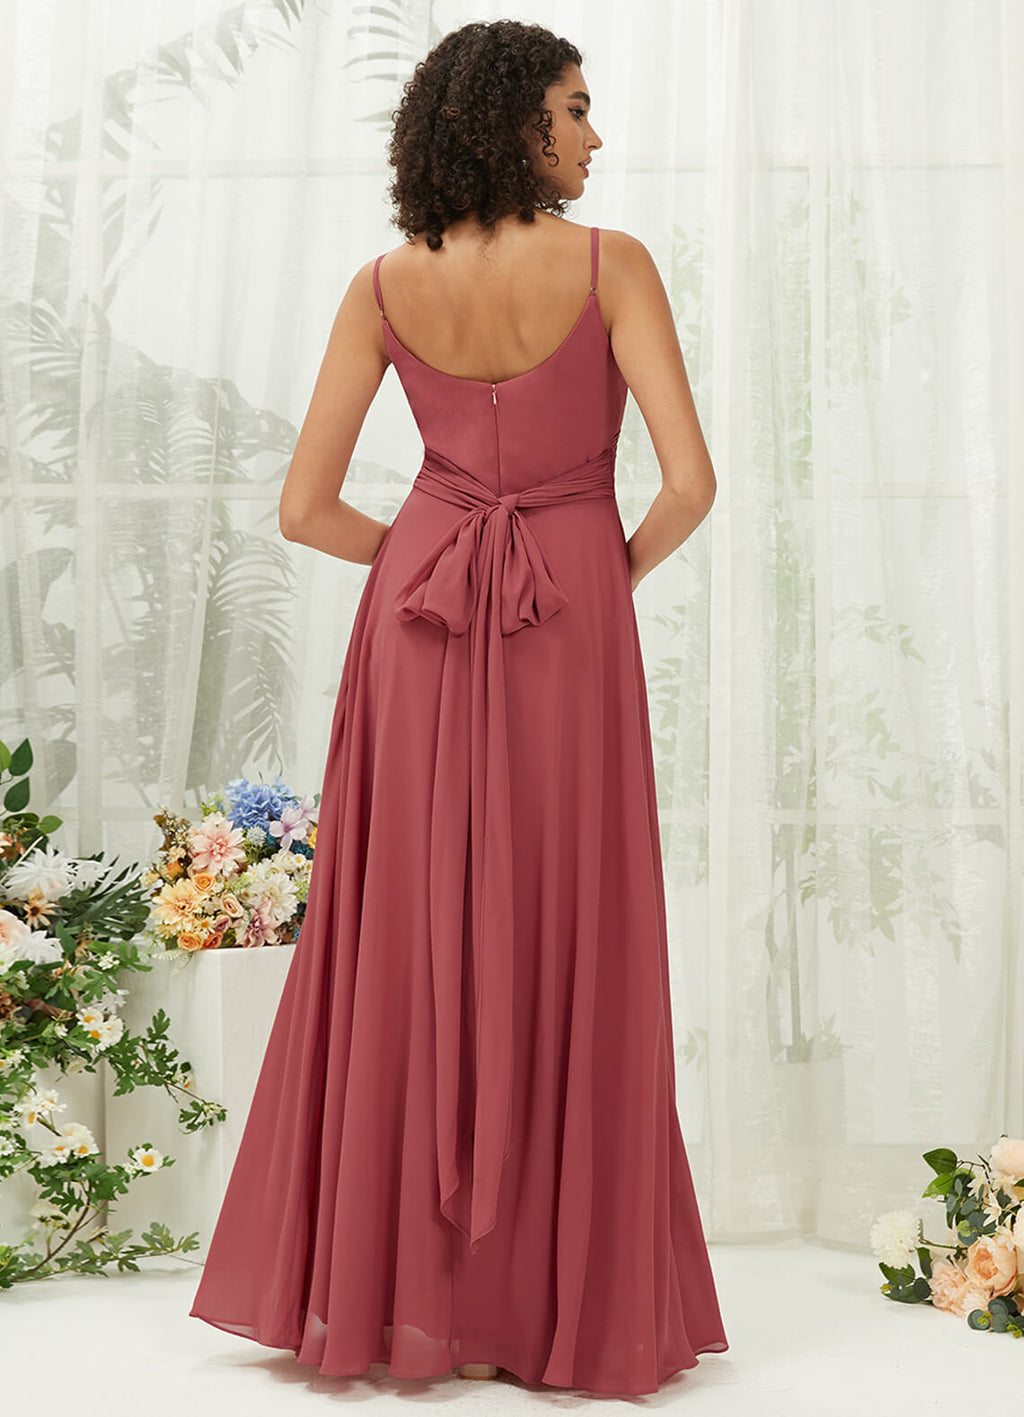 Desert Rose Chiffon Convertible Sweetheart Neckline A Line Floor Length Bridesmaid Dress Elegant Celia for Bridesmaids from NZ Bridal